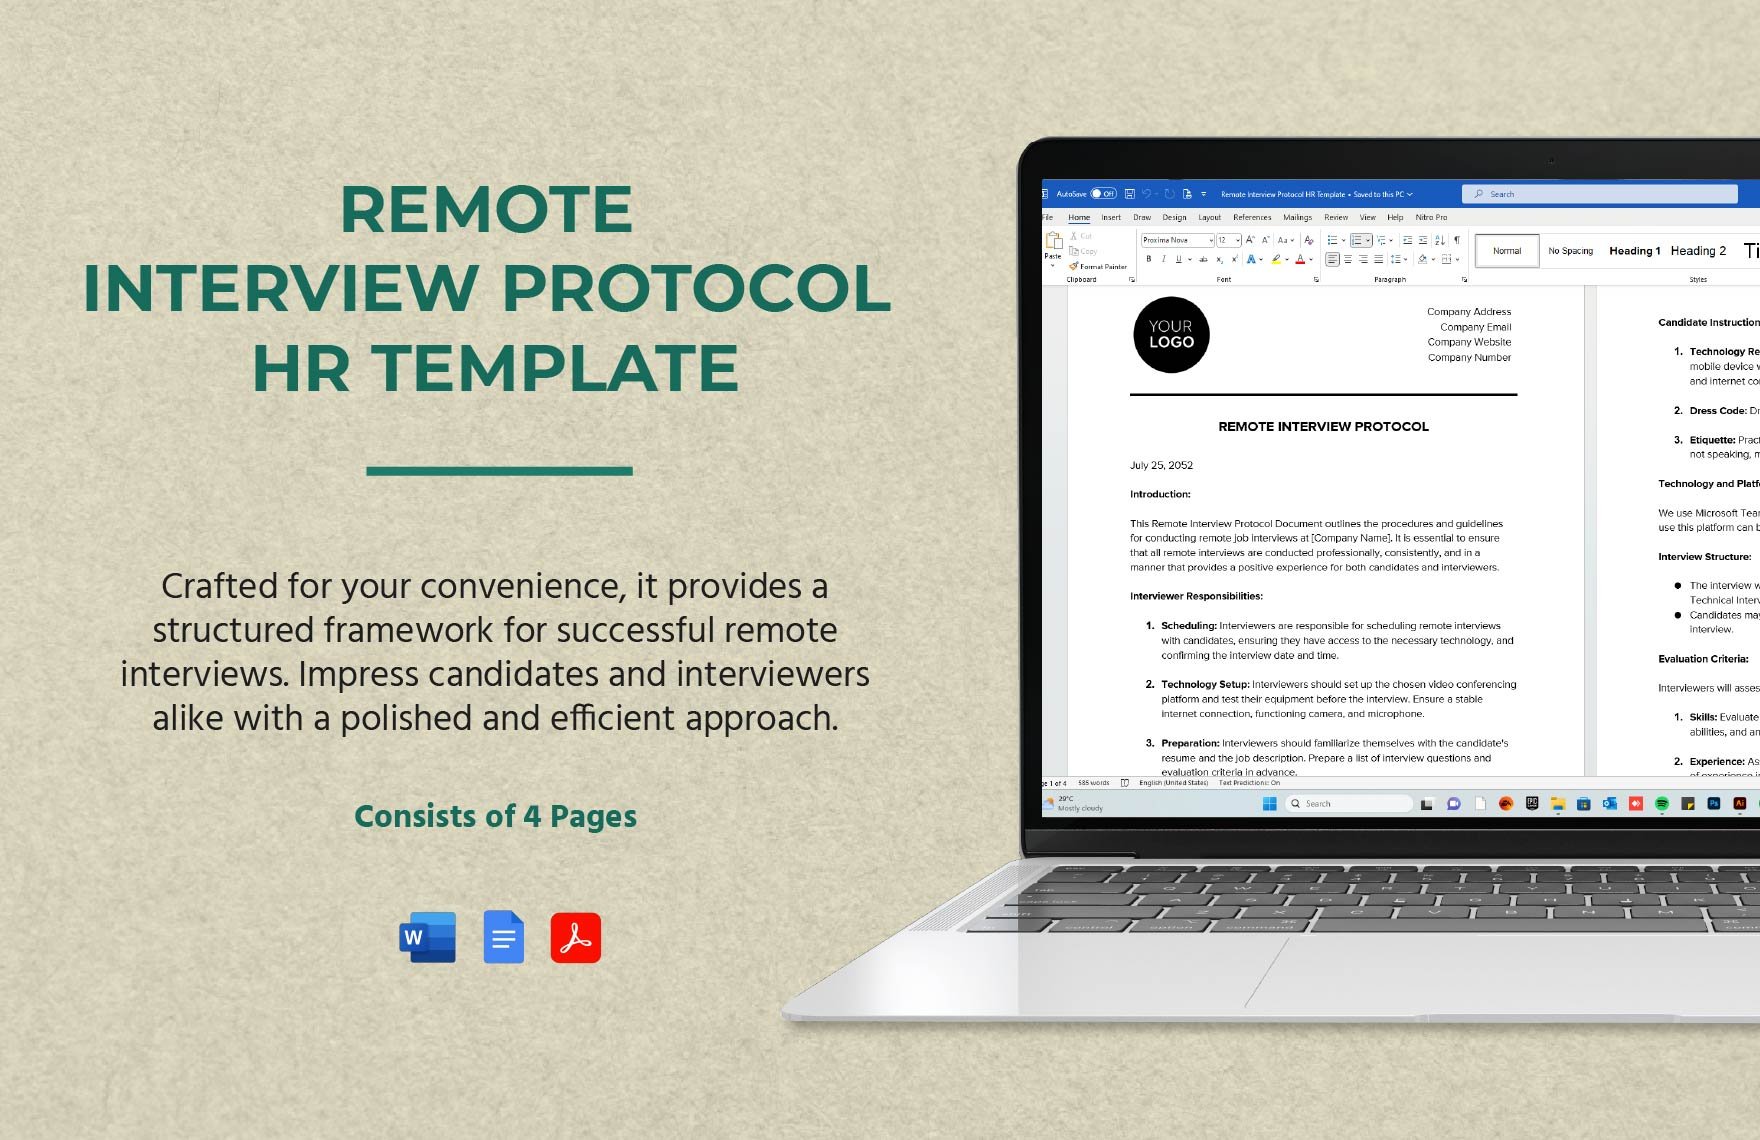 Remote Interview Protocol HR Template